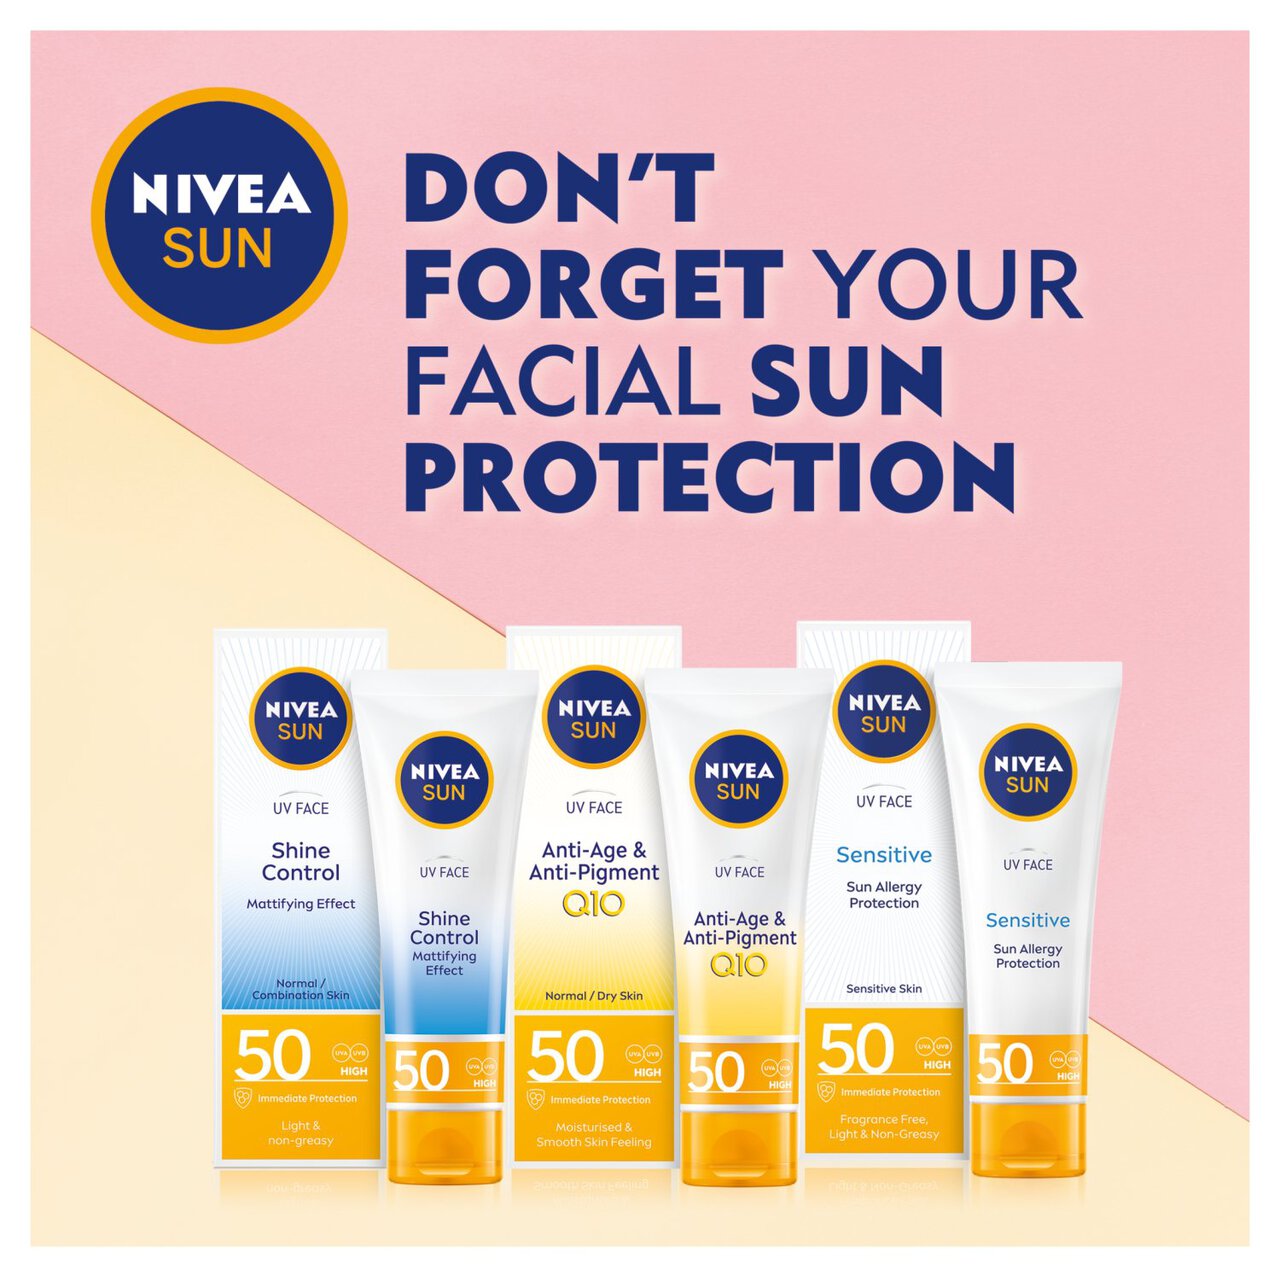 NIVEA SUN Protect & Moisture SPF50+ Sun Cream Lotion 200ml